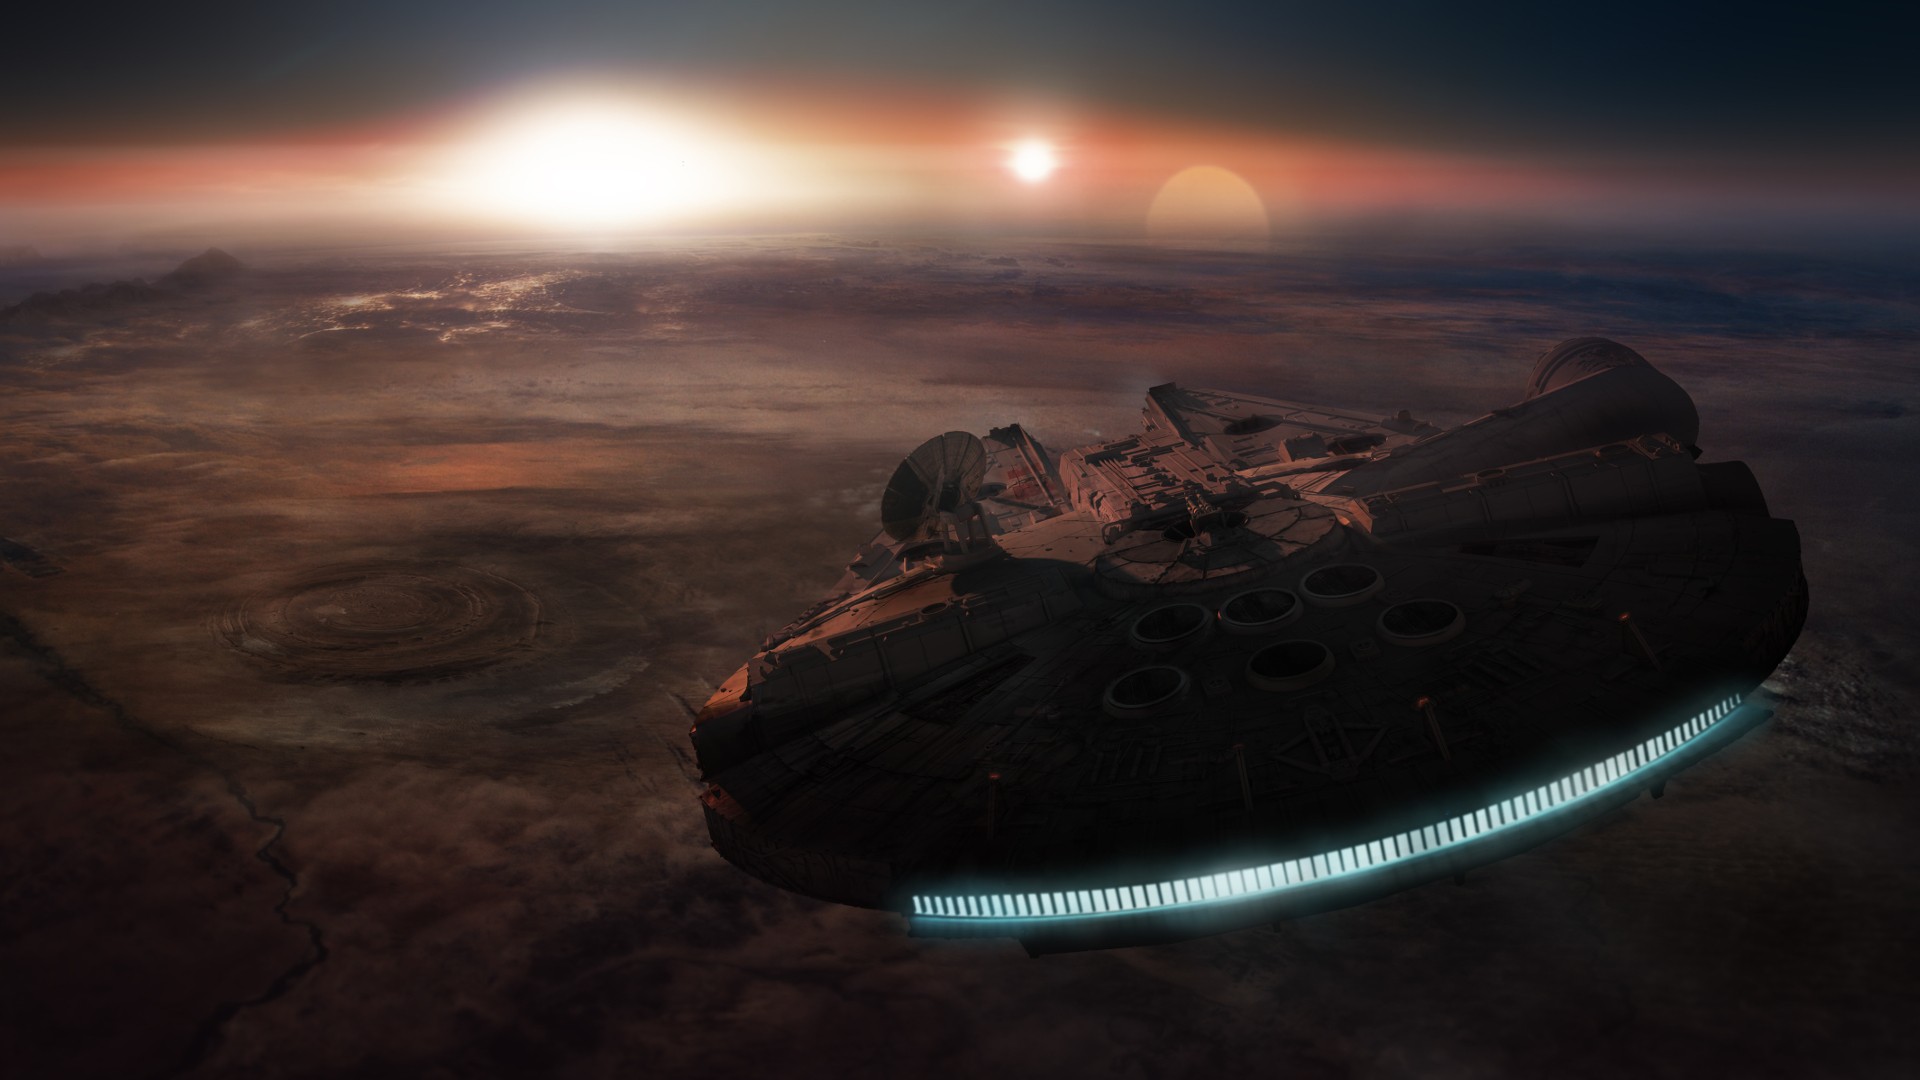 Star Wars Millennium Falcon Star Wars Ships Science Fiction Vehicle Planet Spaceship Sky Desert Cgi Render Digital Art Artwork Sunlight 19x1080 Wallpaper Wallhaven Cc